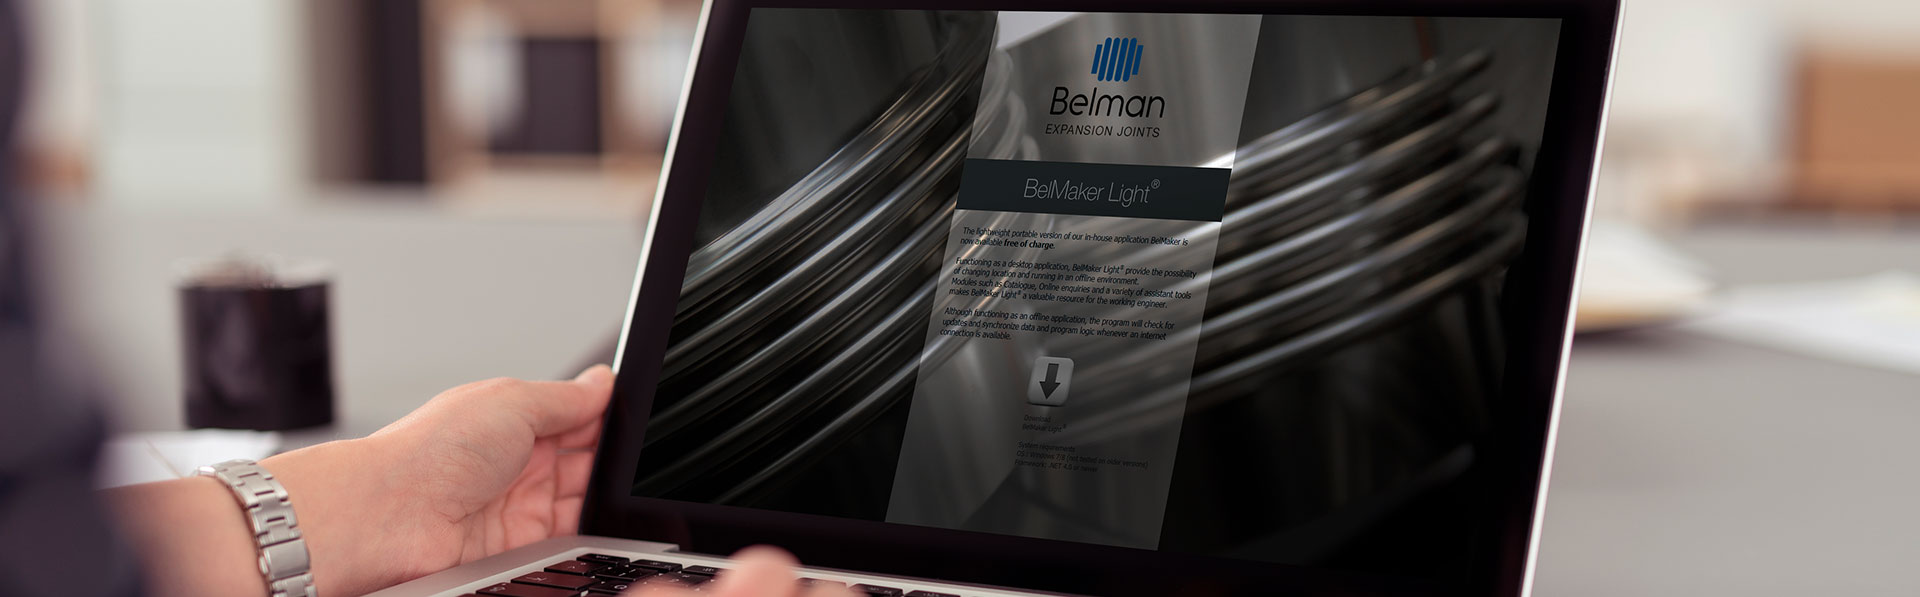 BelMaker Light expansion joint software